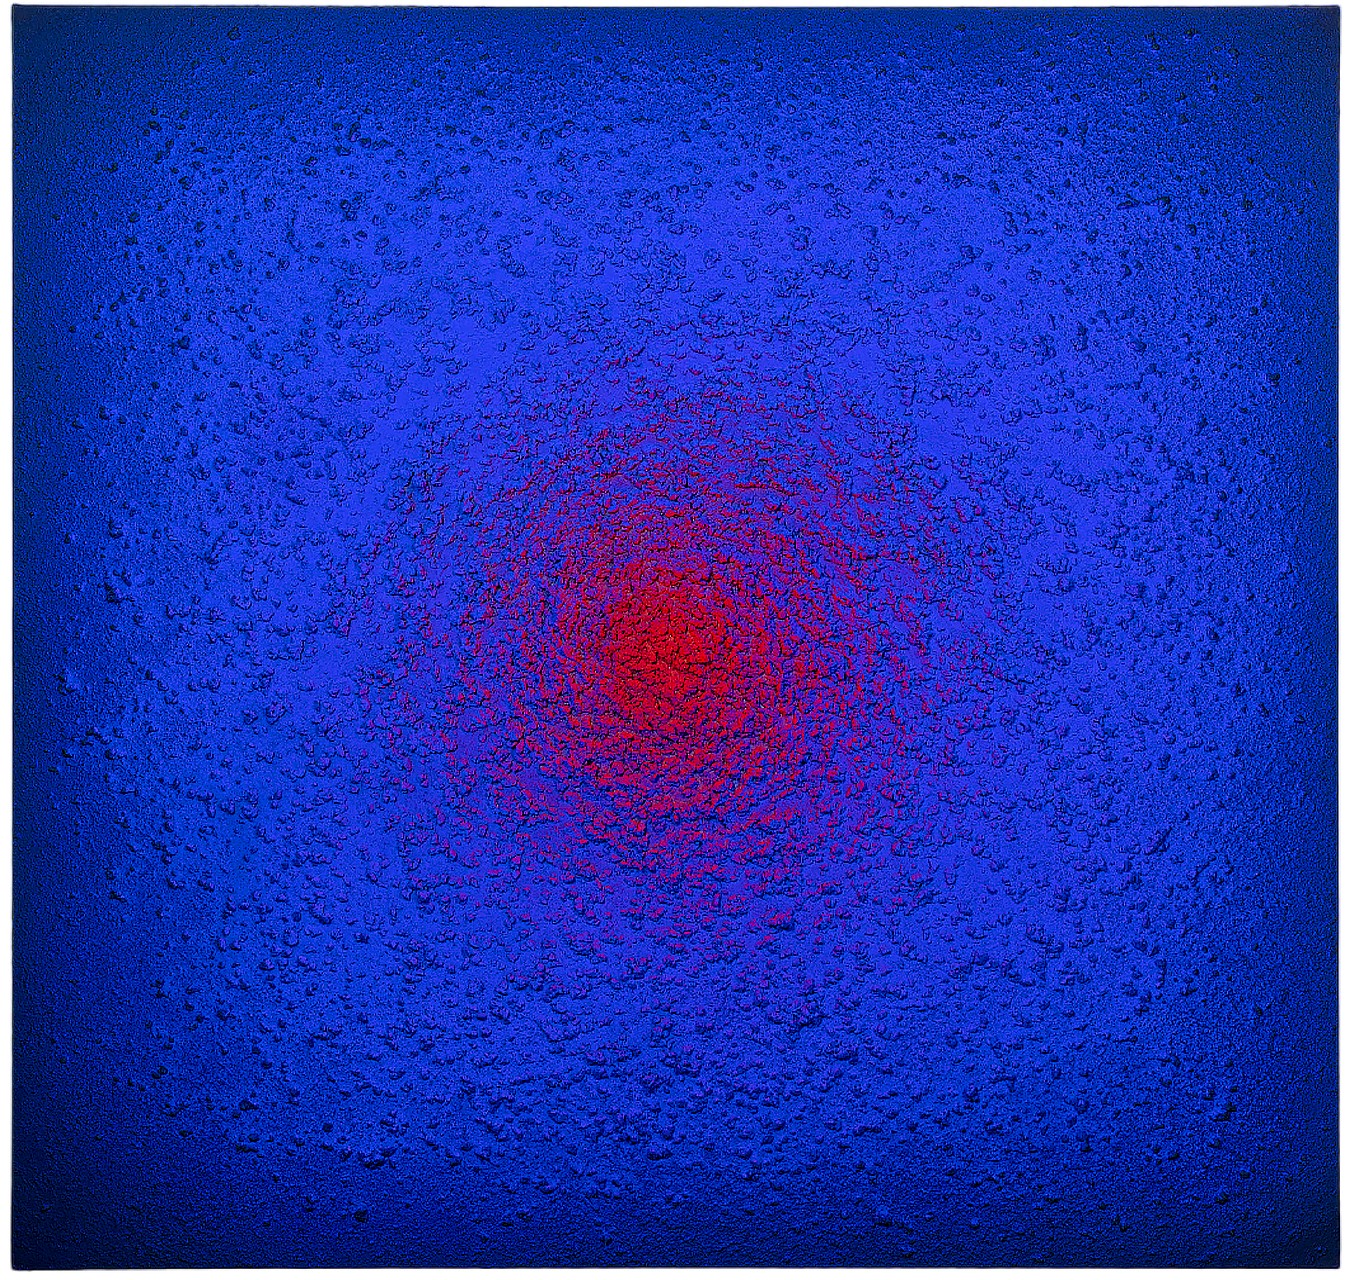 Interstellar Galaxy Red Blue 18.60 - SAMUEL DEJONG - Galeries Bartoux